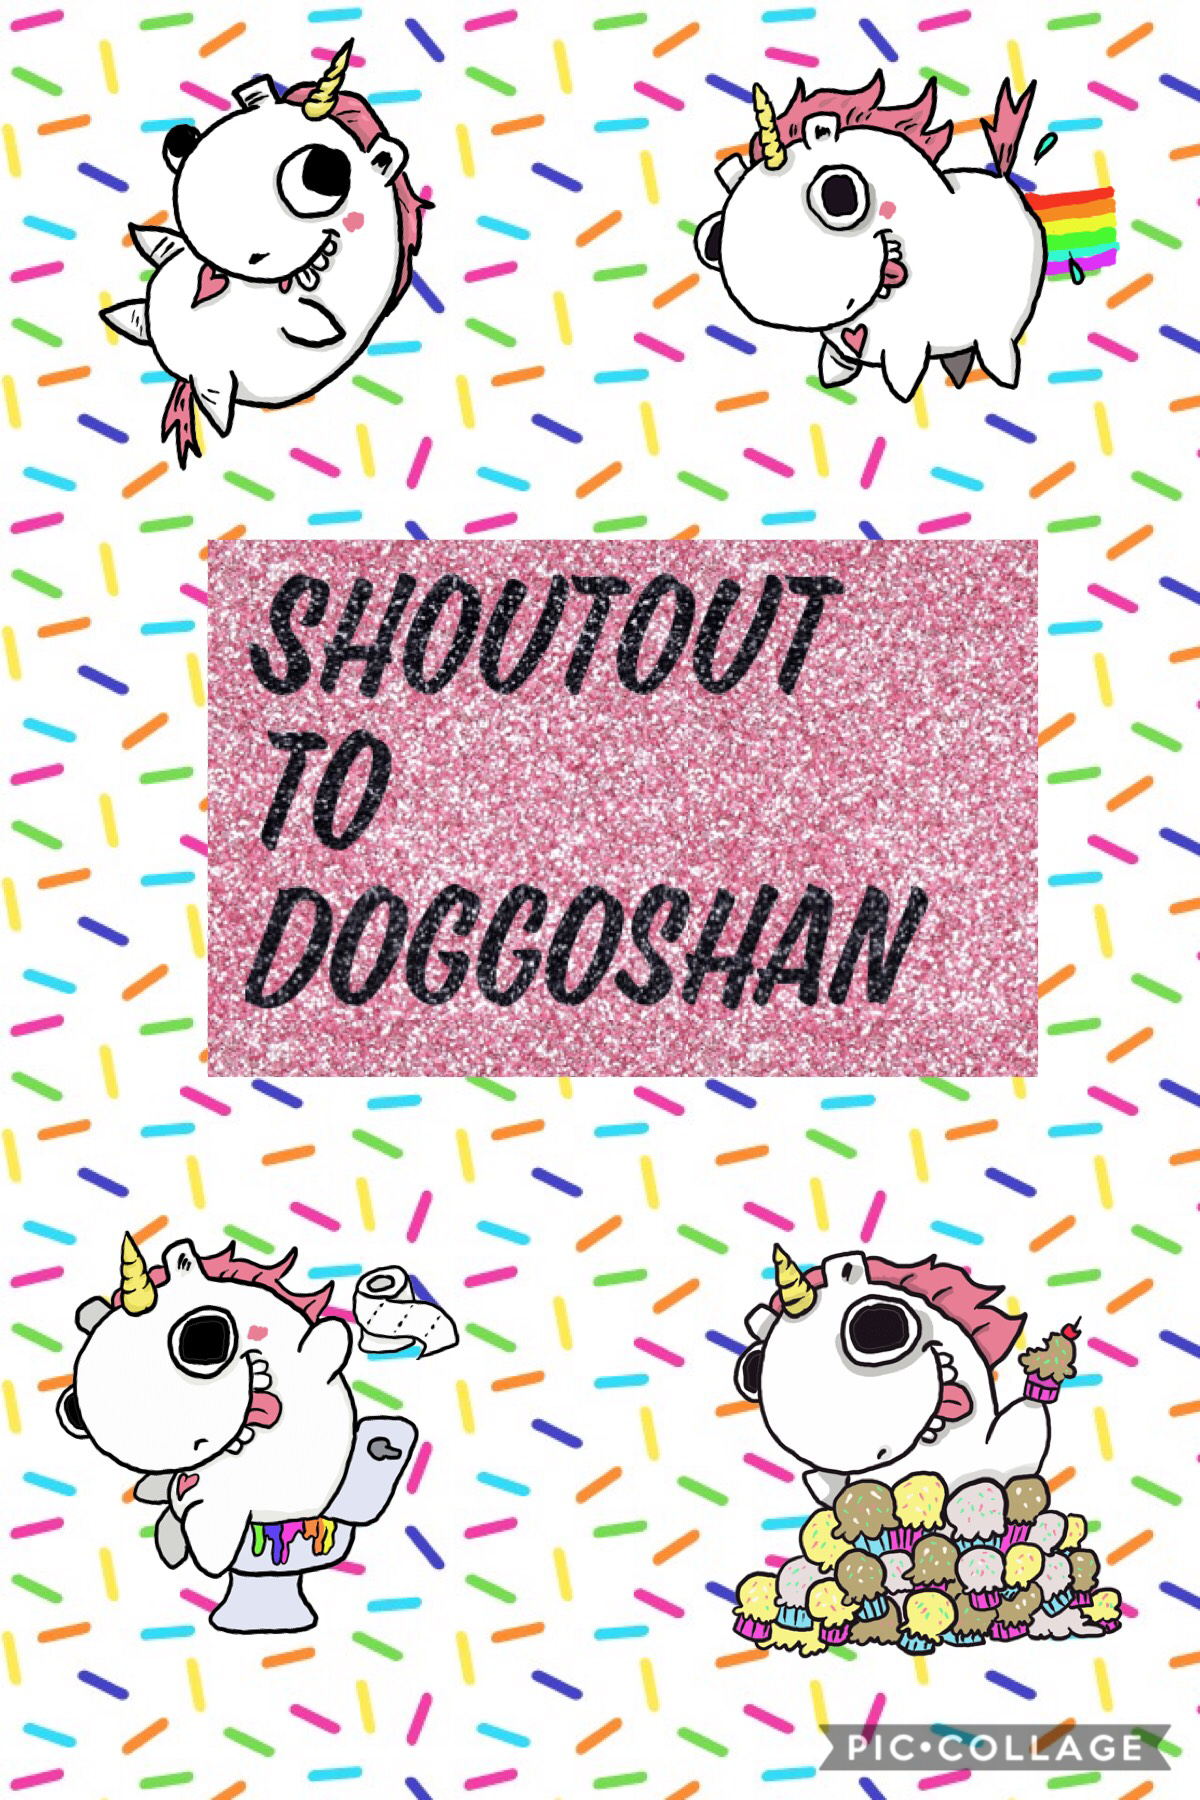 Follow Doggoshan